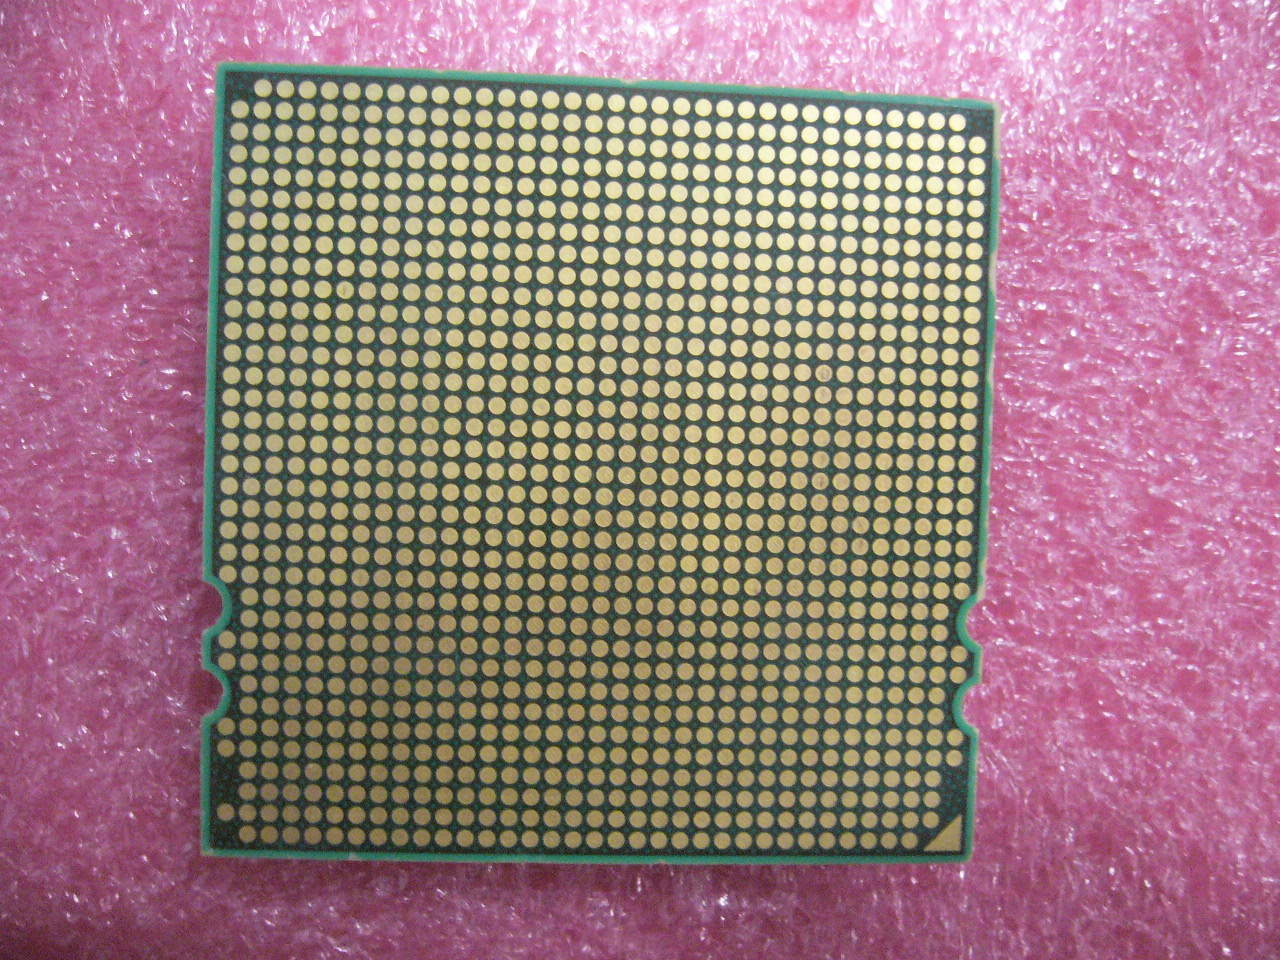 QTY 1x AMD Opteron 8360 SE 2.5 GHz Quad-Core (OS8360YAL4BGD) CPU Socket F 1207 - Click Image to Close